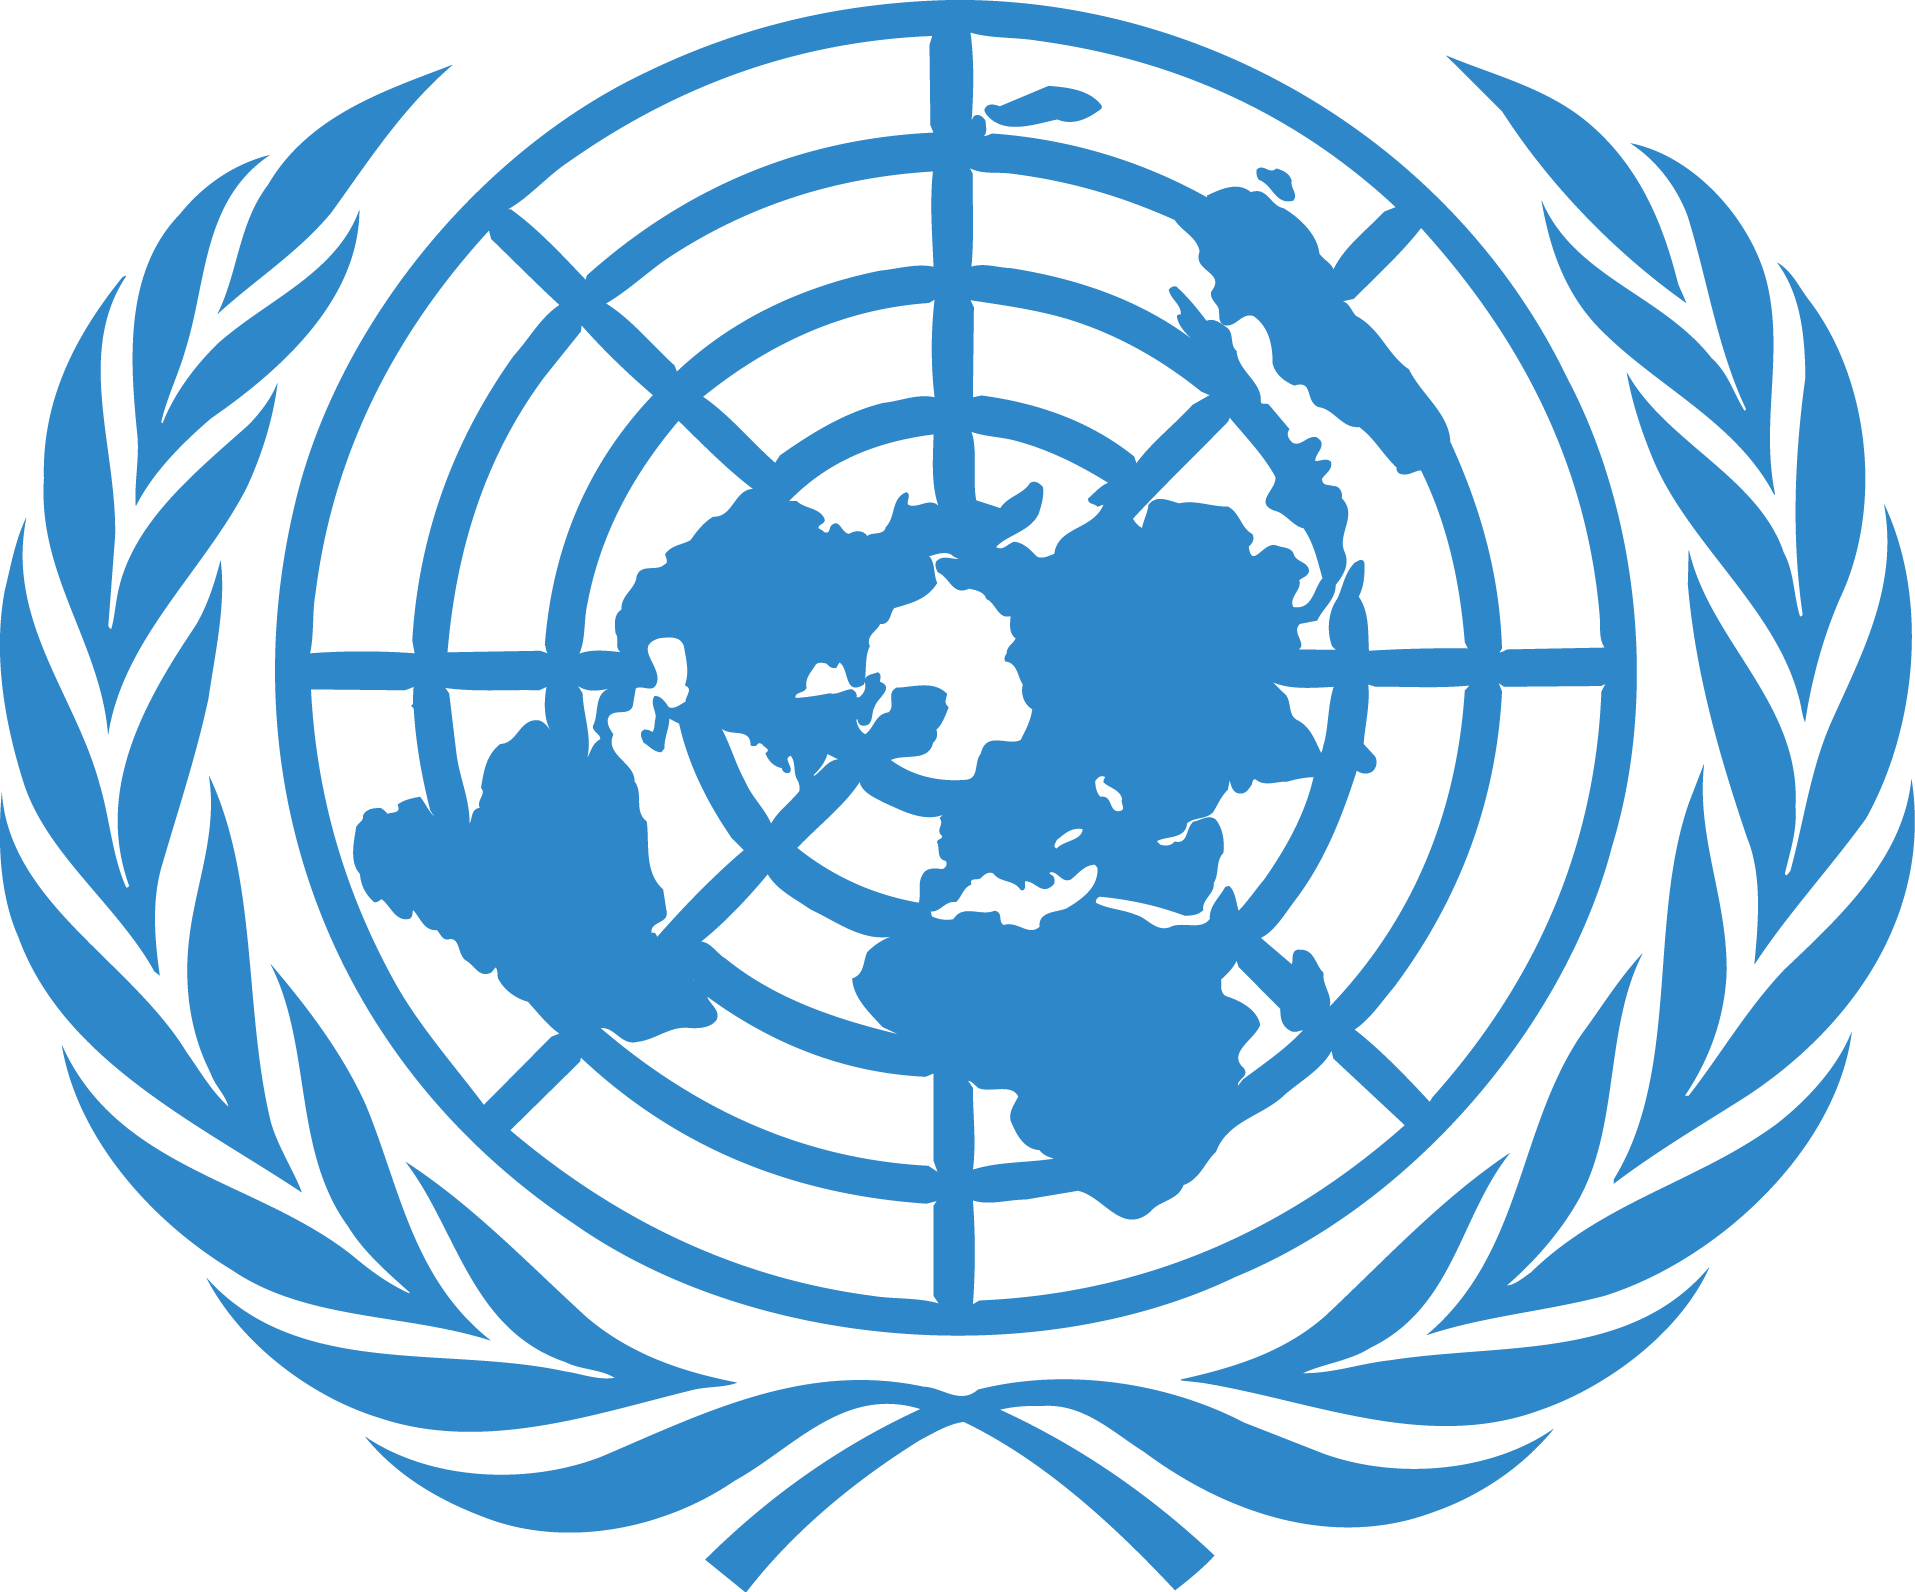 Verenigde Naties Embleem Logo PNG Transparant Beeld